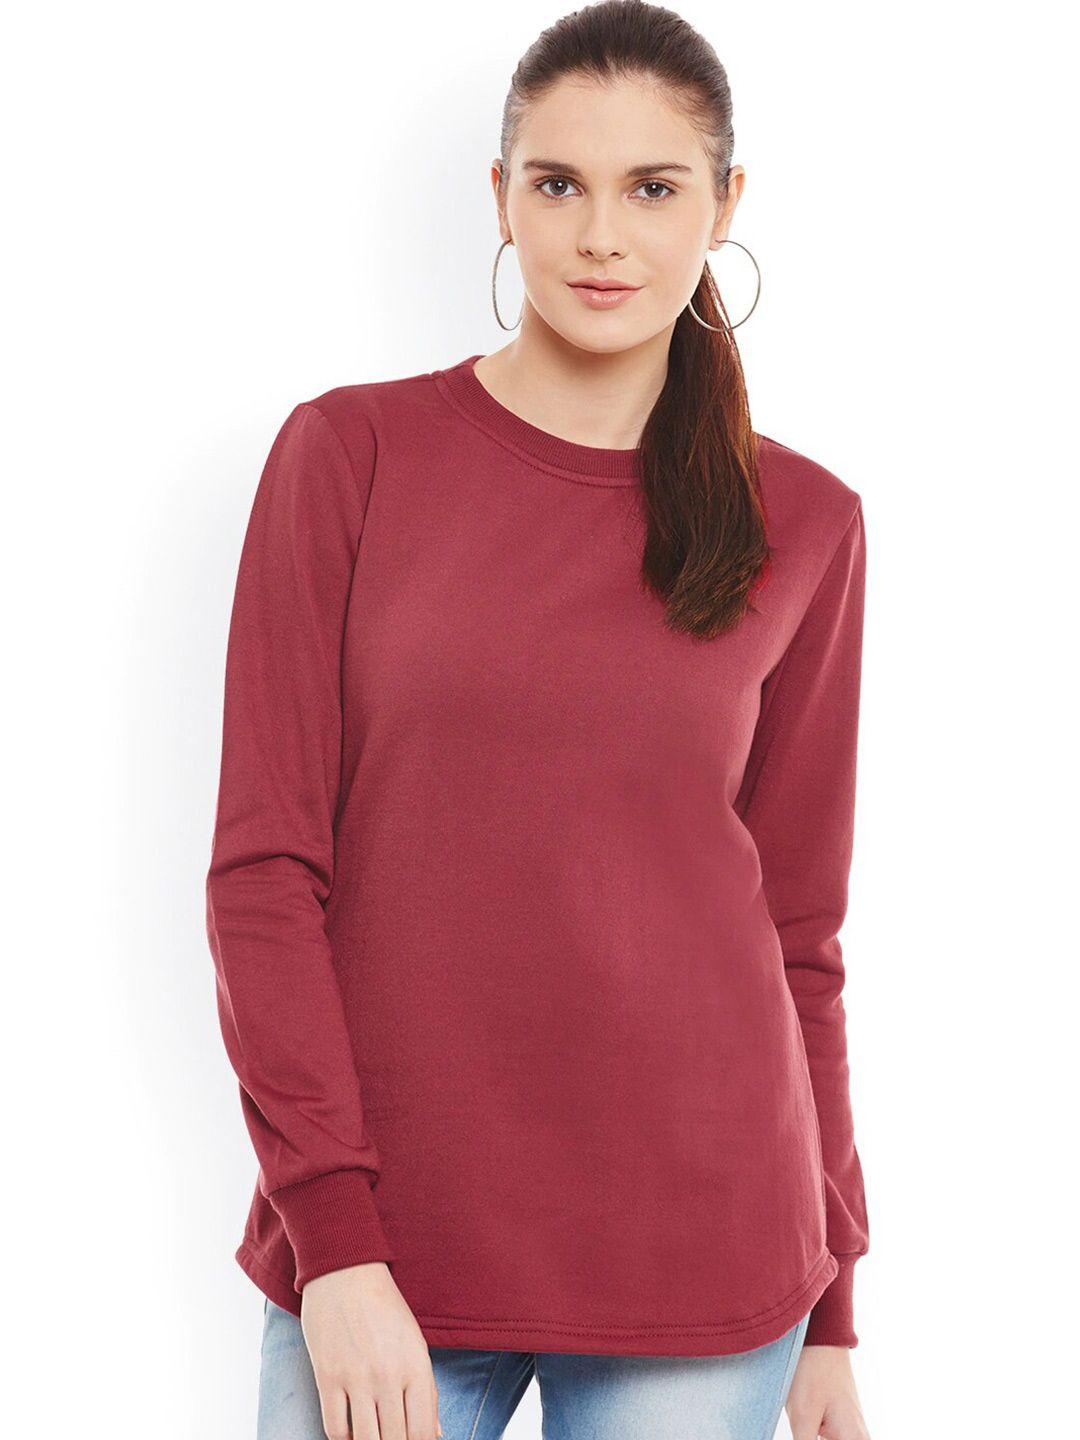 baesd-women-maroon-sweatshirt